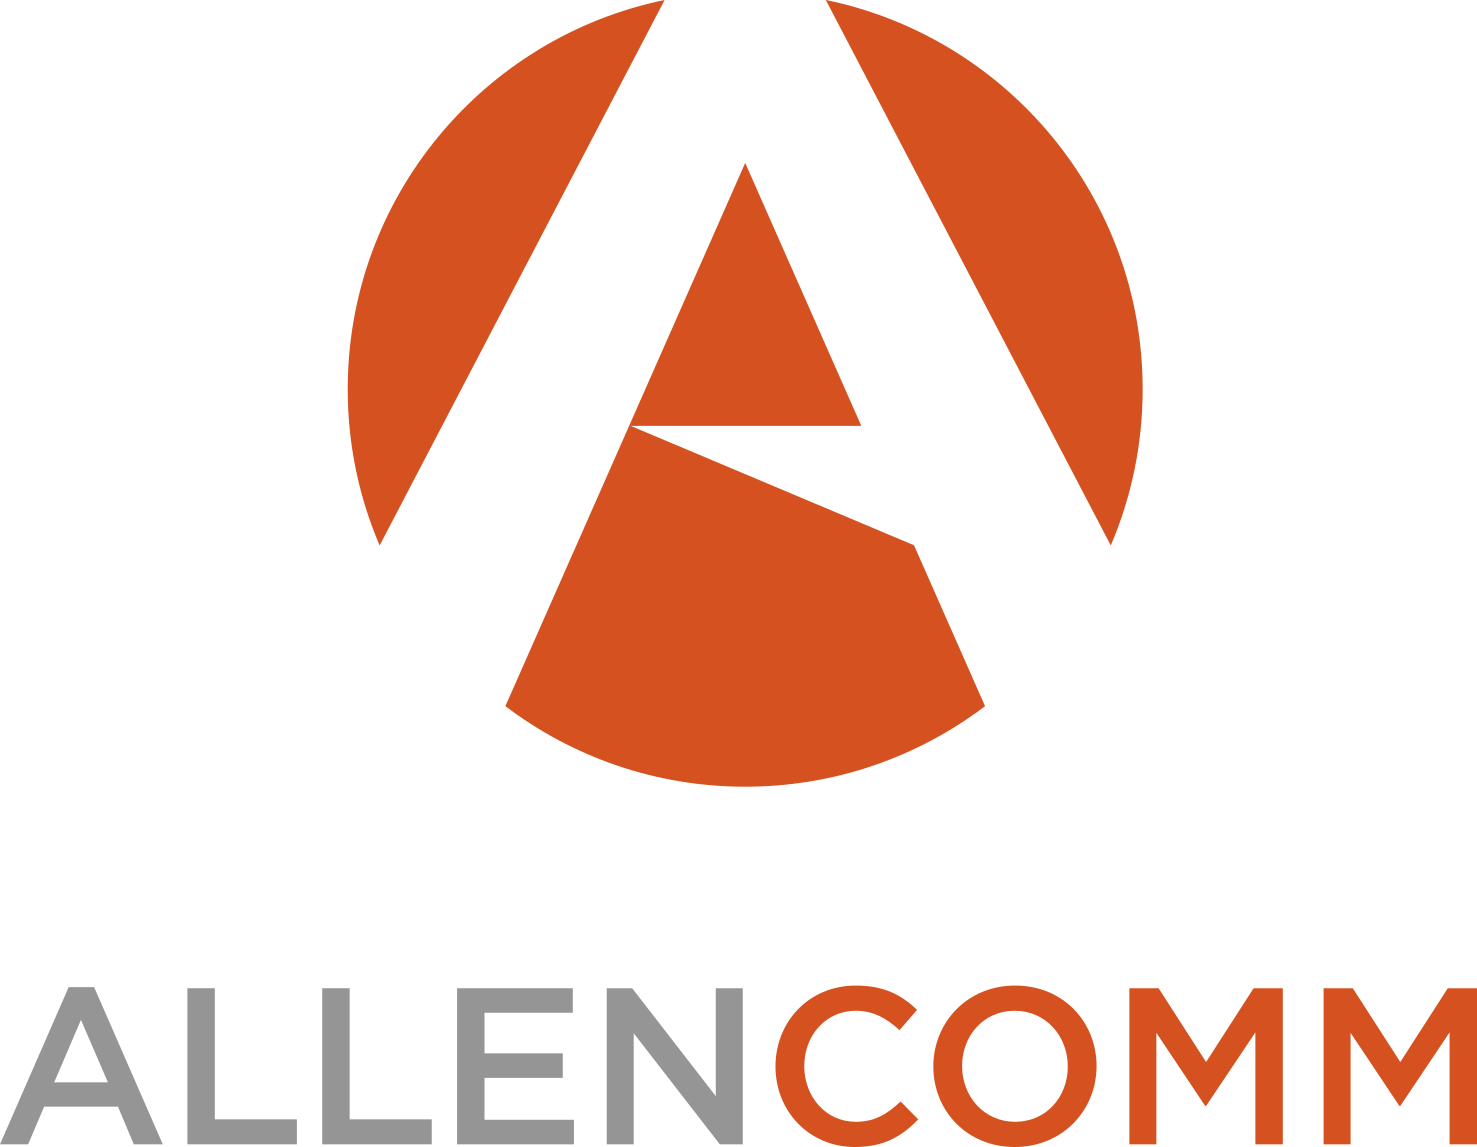 AllenComm-_1_.png